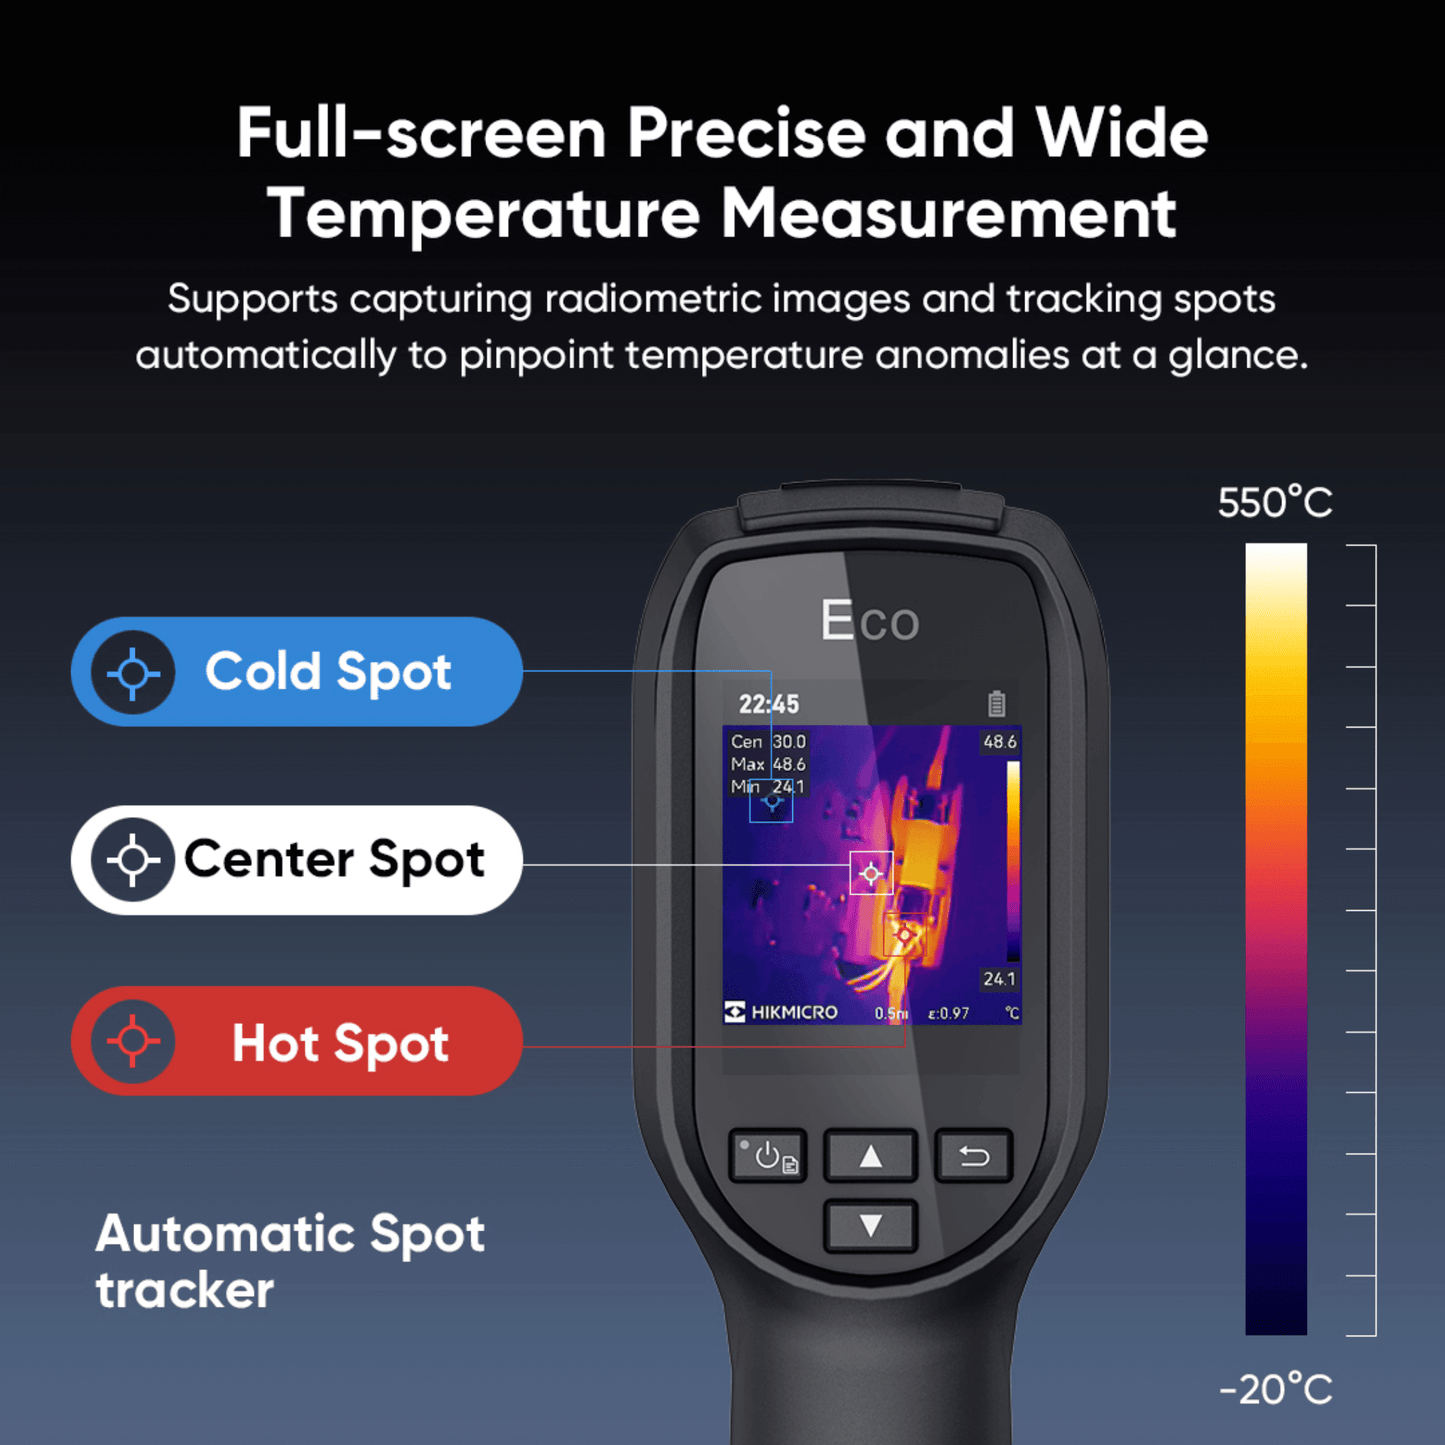 Get precise temperature measurement with the Bi-Spectrum HikMicro Eco-V Handheld Thermal Imager 